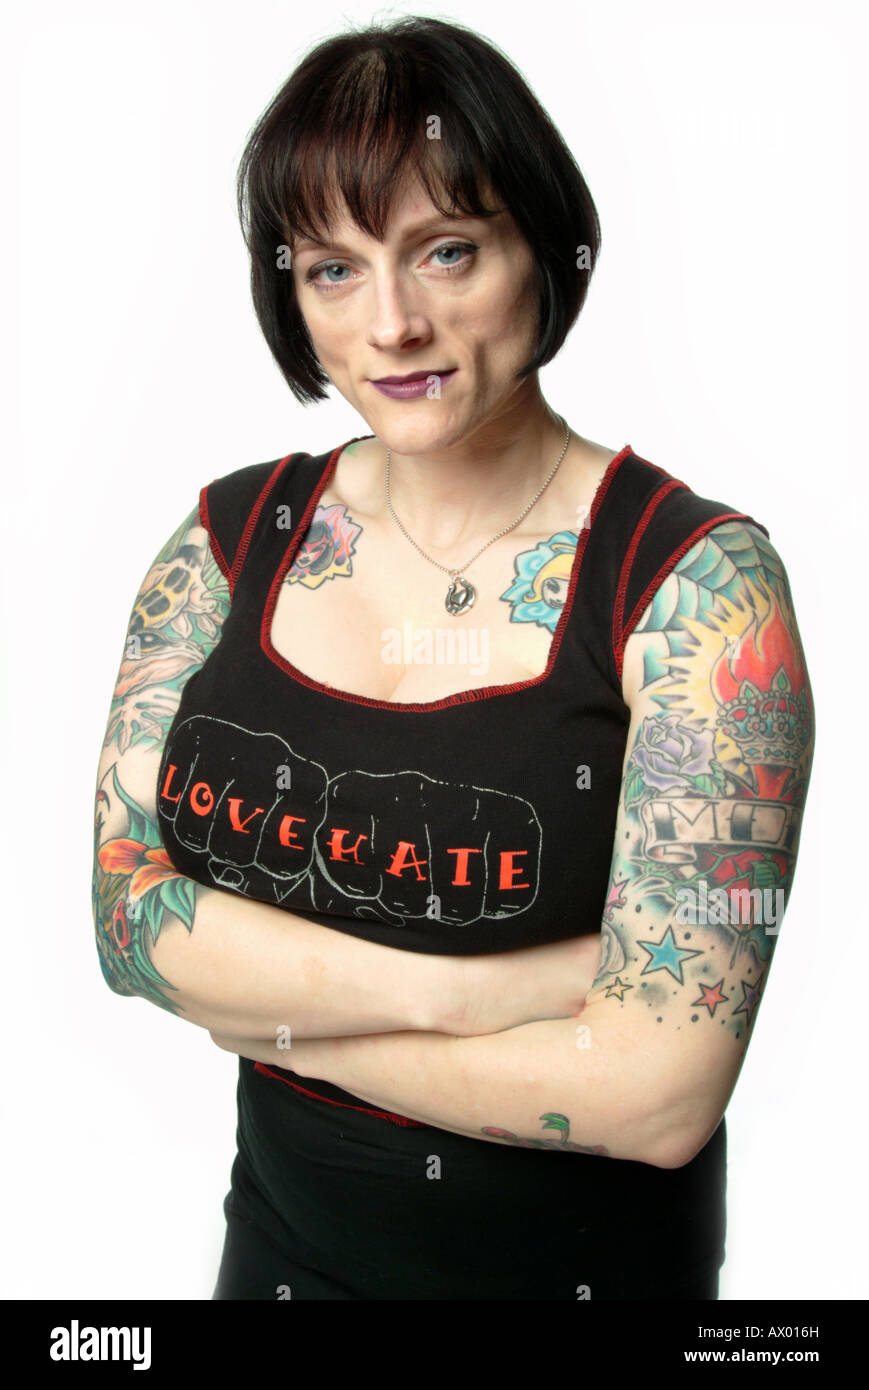 Heavily tattooed female wearing a 'Love, Hate' t-shirt. Stock Photo